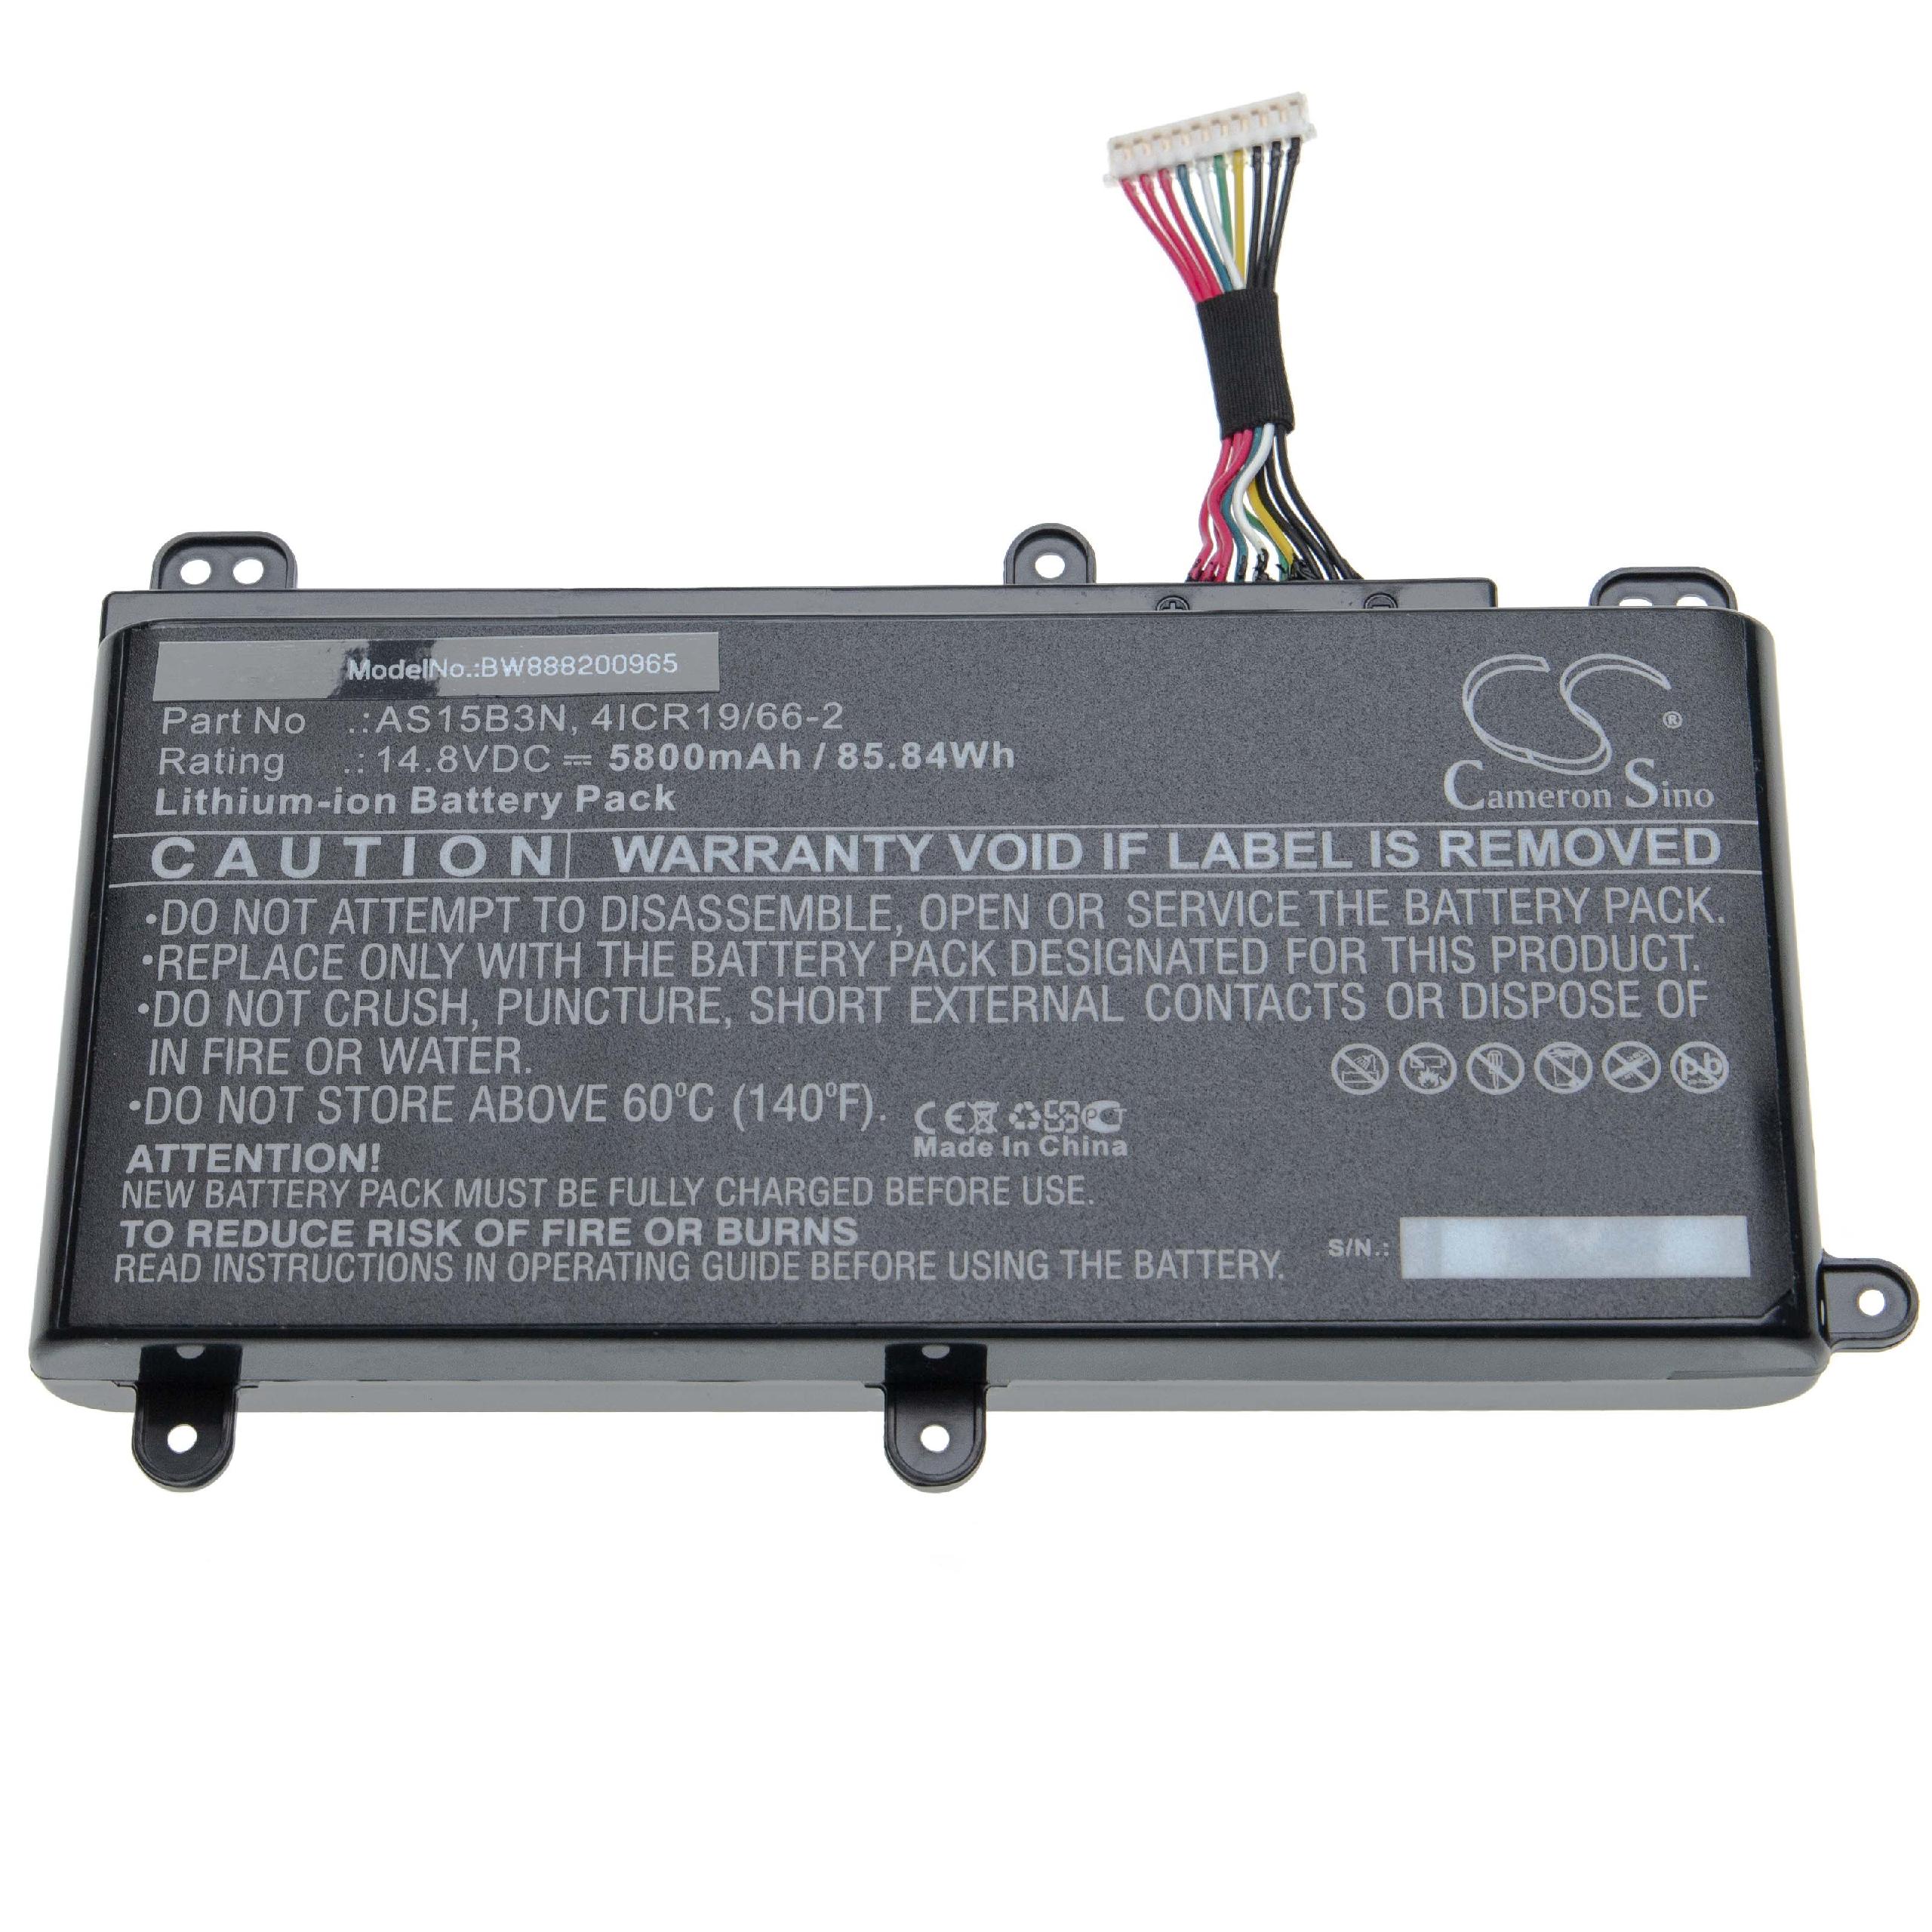 Akumulator do laptopa zamiennik Acer 4ICR19/66-2, AS15B3N, KT.00803.004 - 5800 mAh 14,8 V Li-Ion, czarny